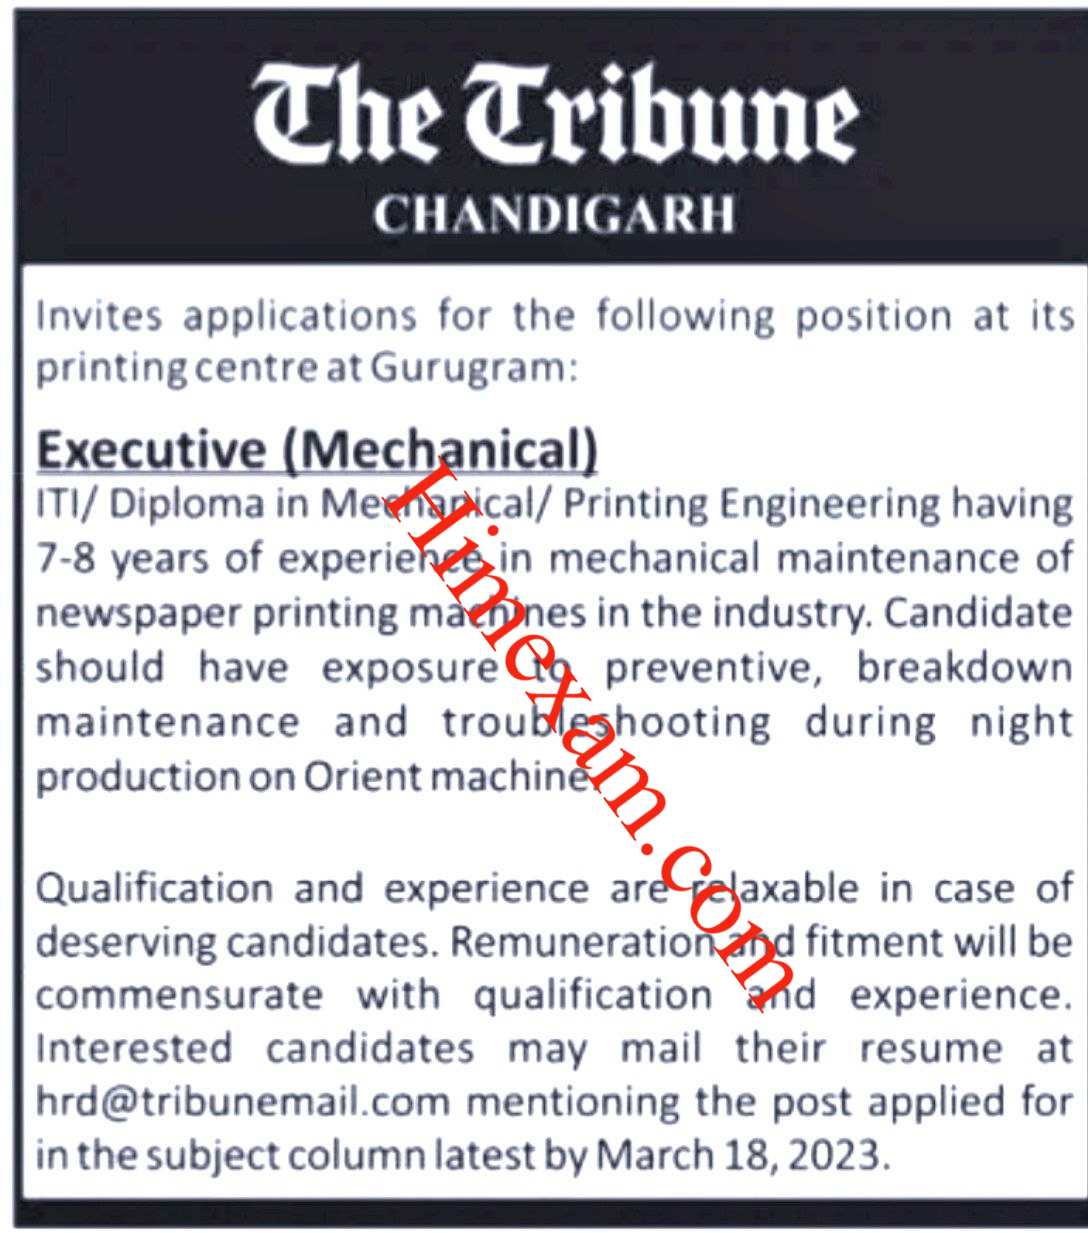 The Tribune Chandigarh Executive (Mechanical) Recruitment 2023